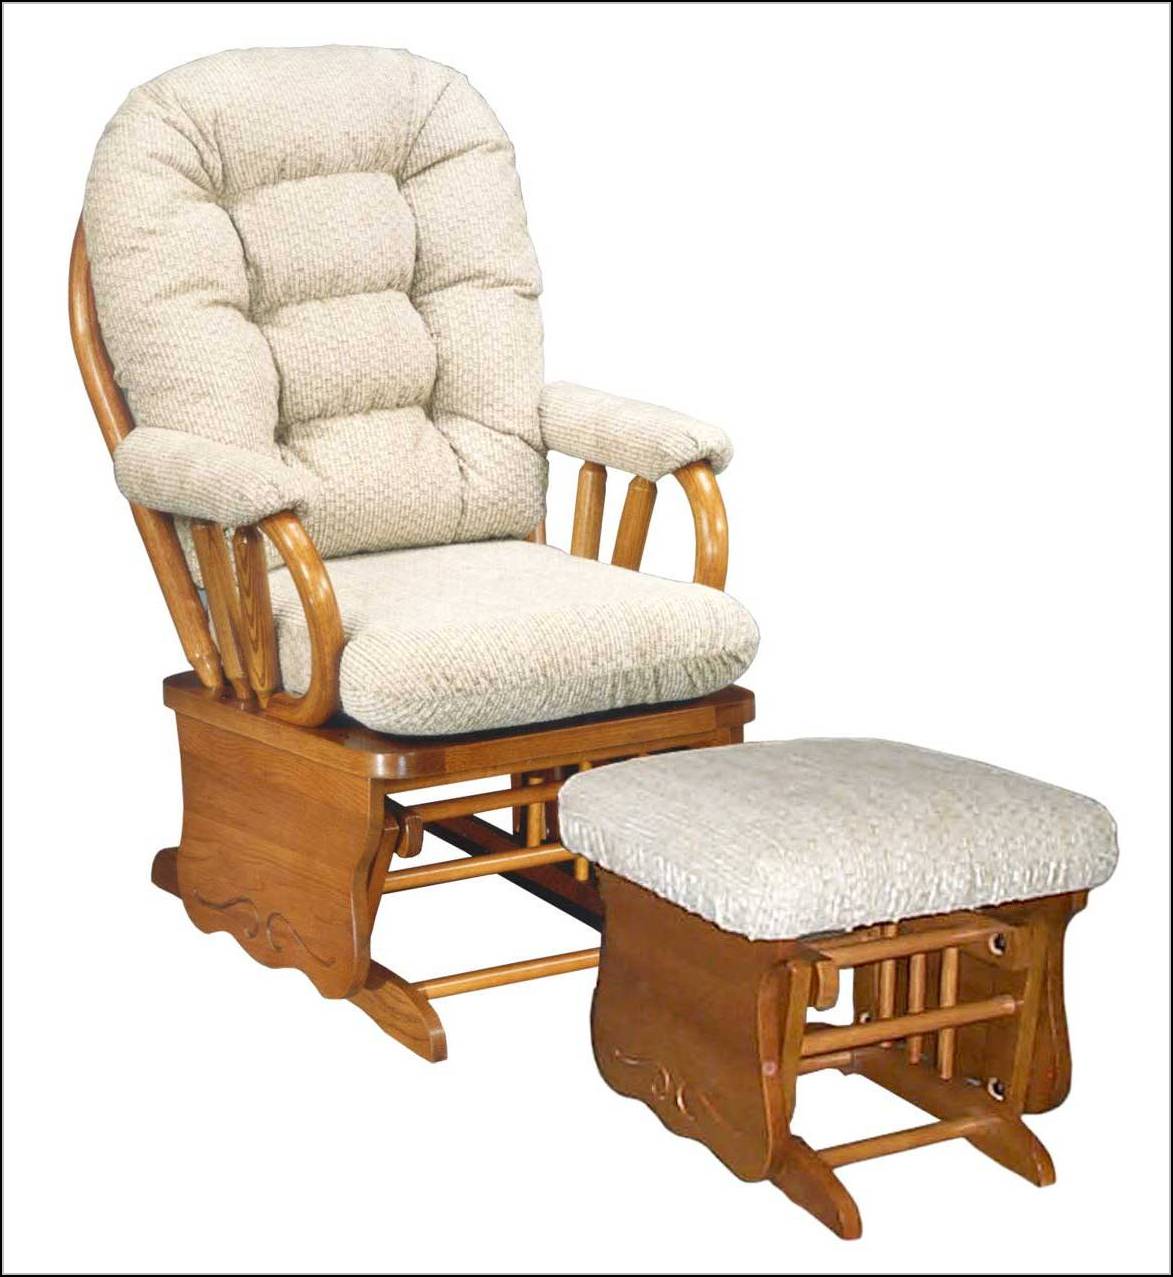 Rocking Chair Cushions Uk - Chairs : Home Design Ideas #32mD9KkPOJ567